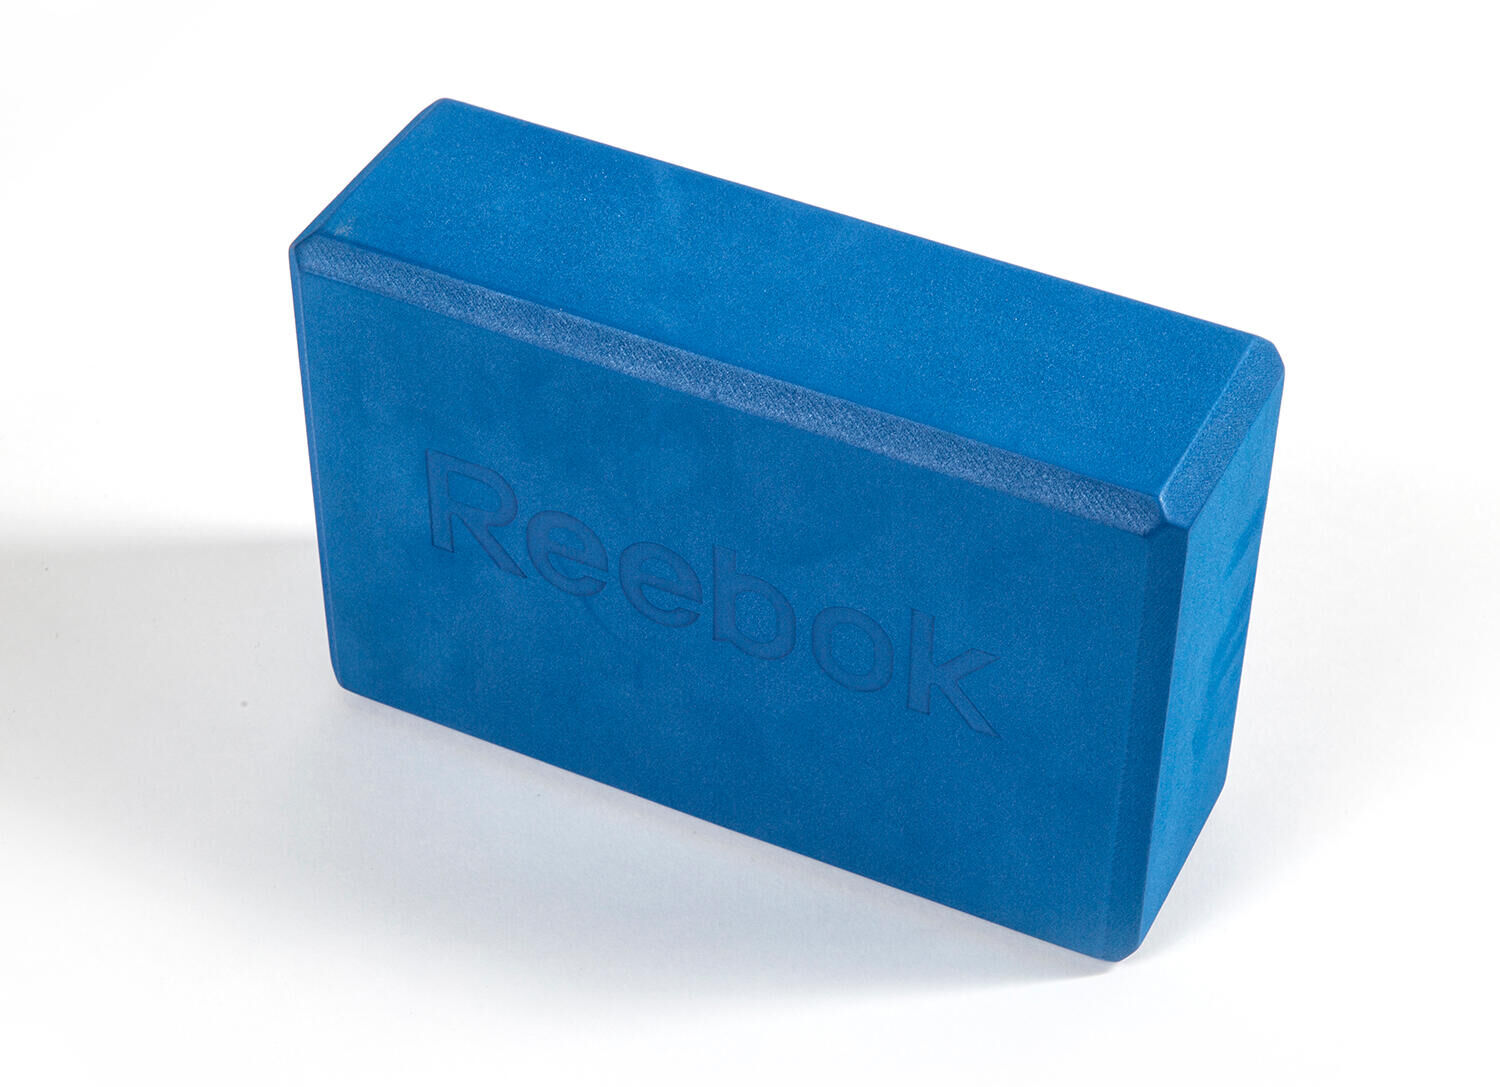 REEBOK Yoga Block Brick - Blue